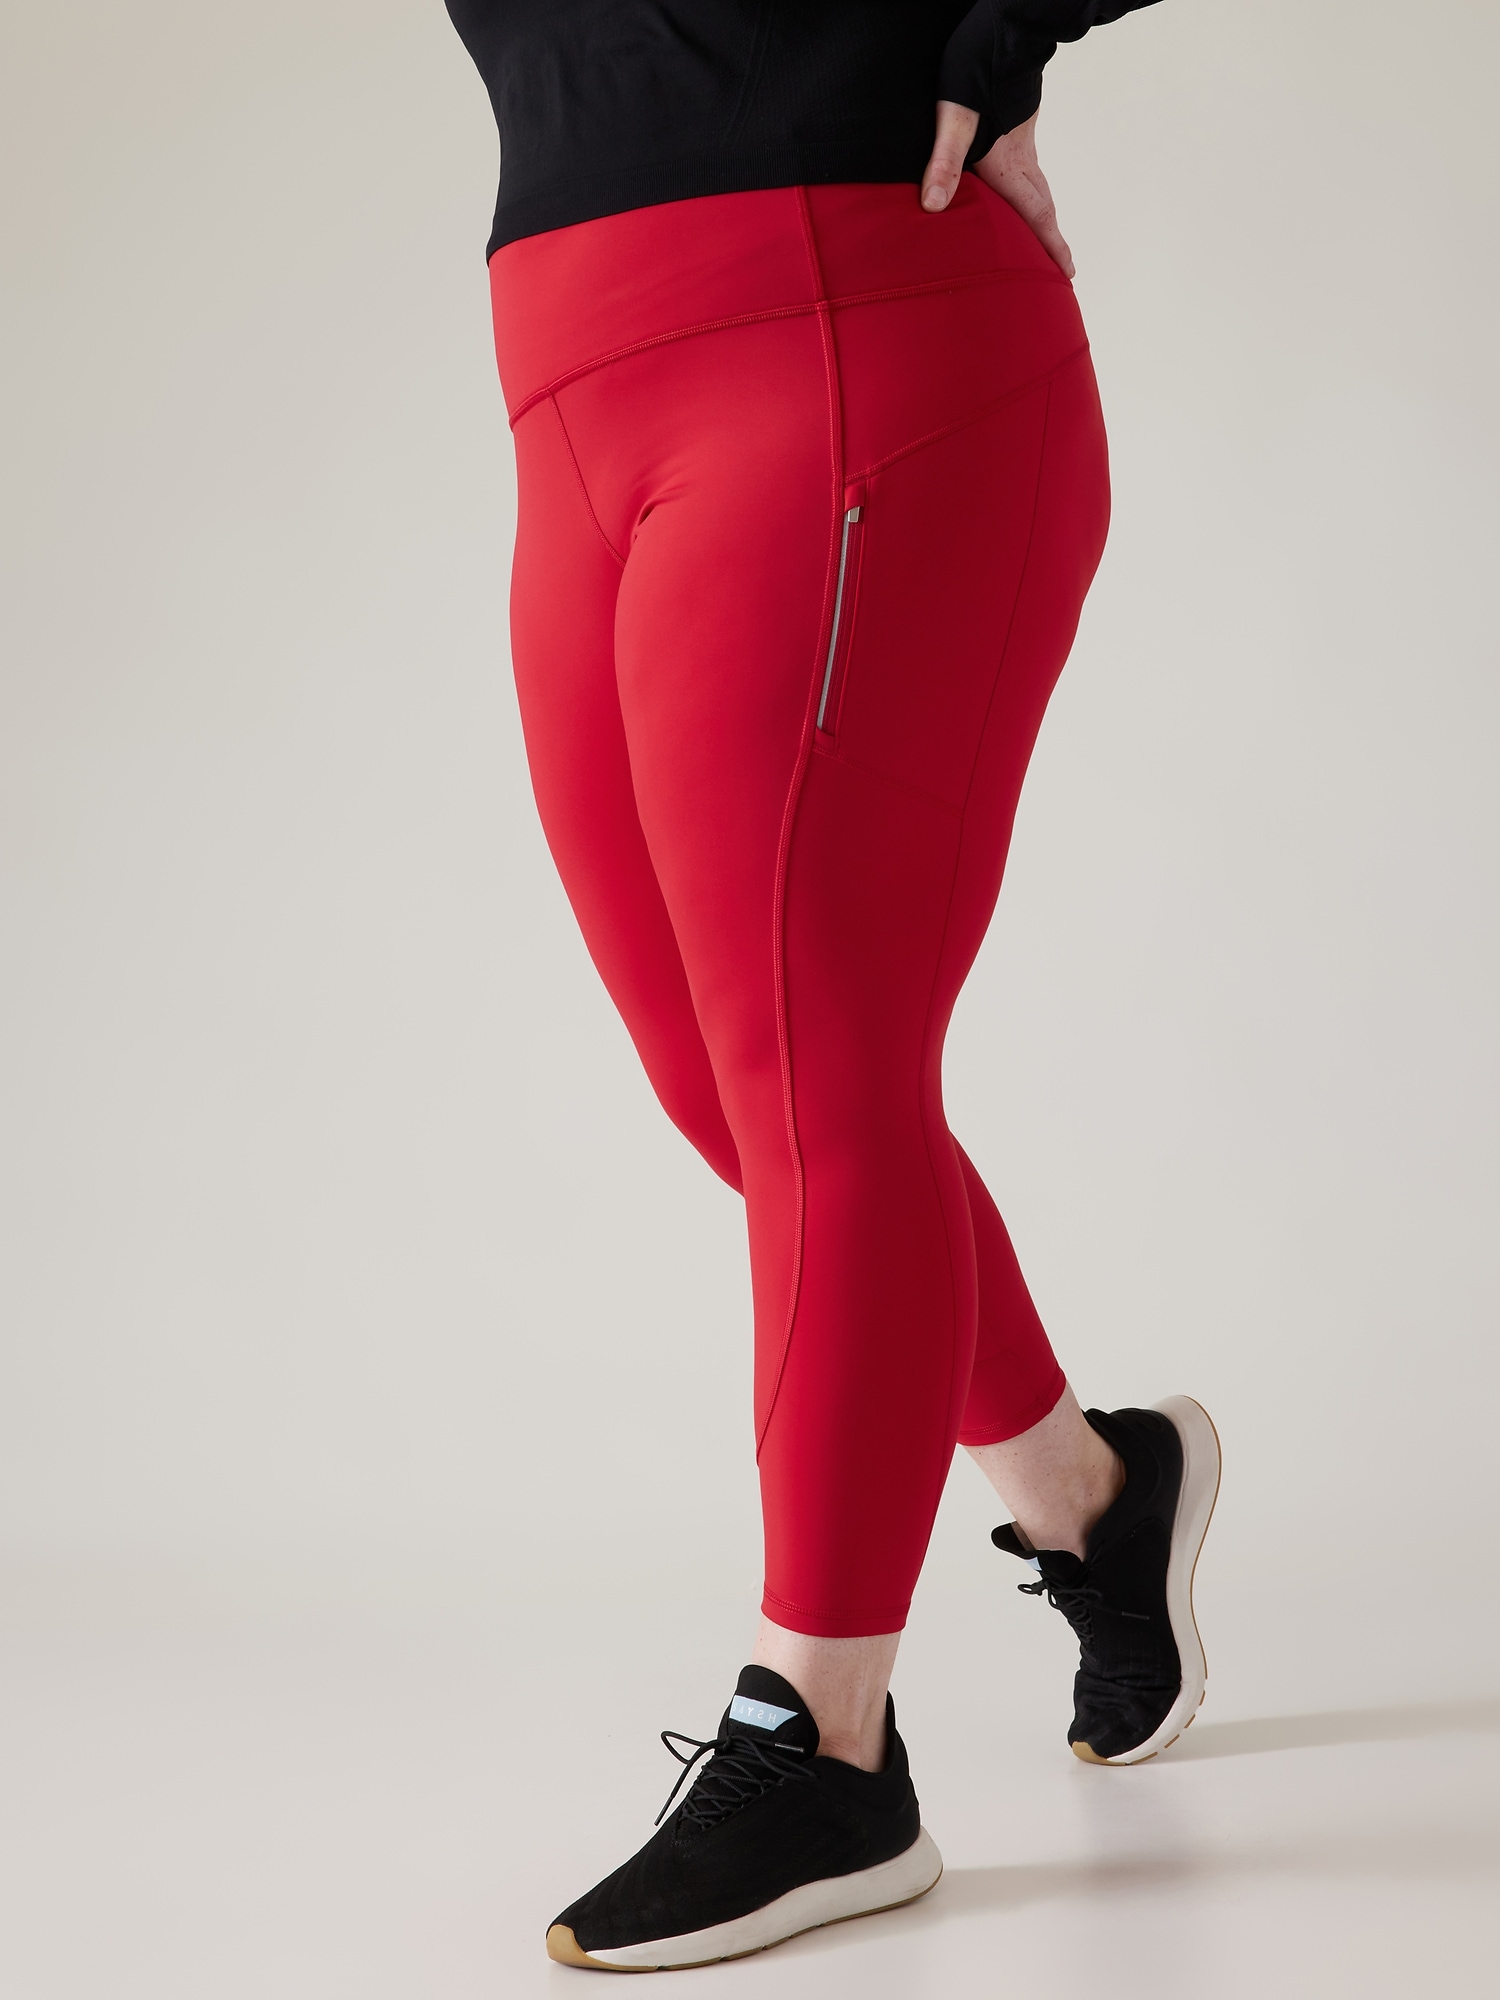 Athleta NWT Women's Rainier Tight Size XLarge Color Decadent